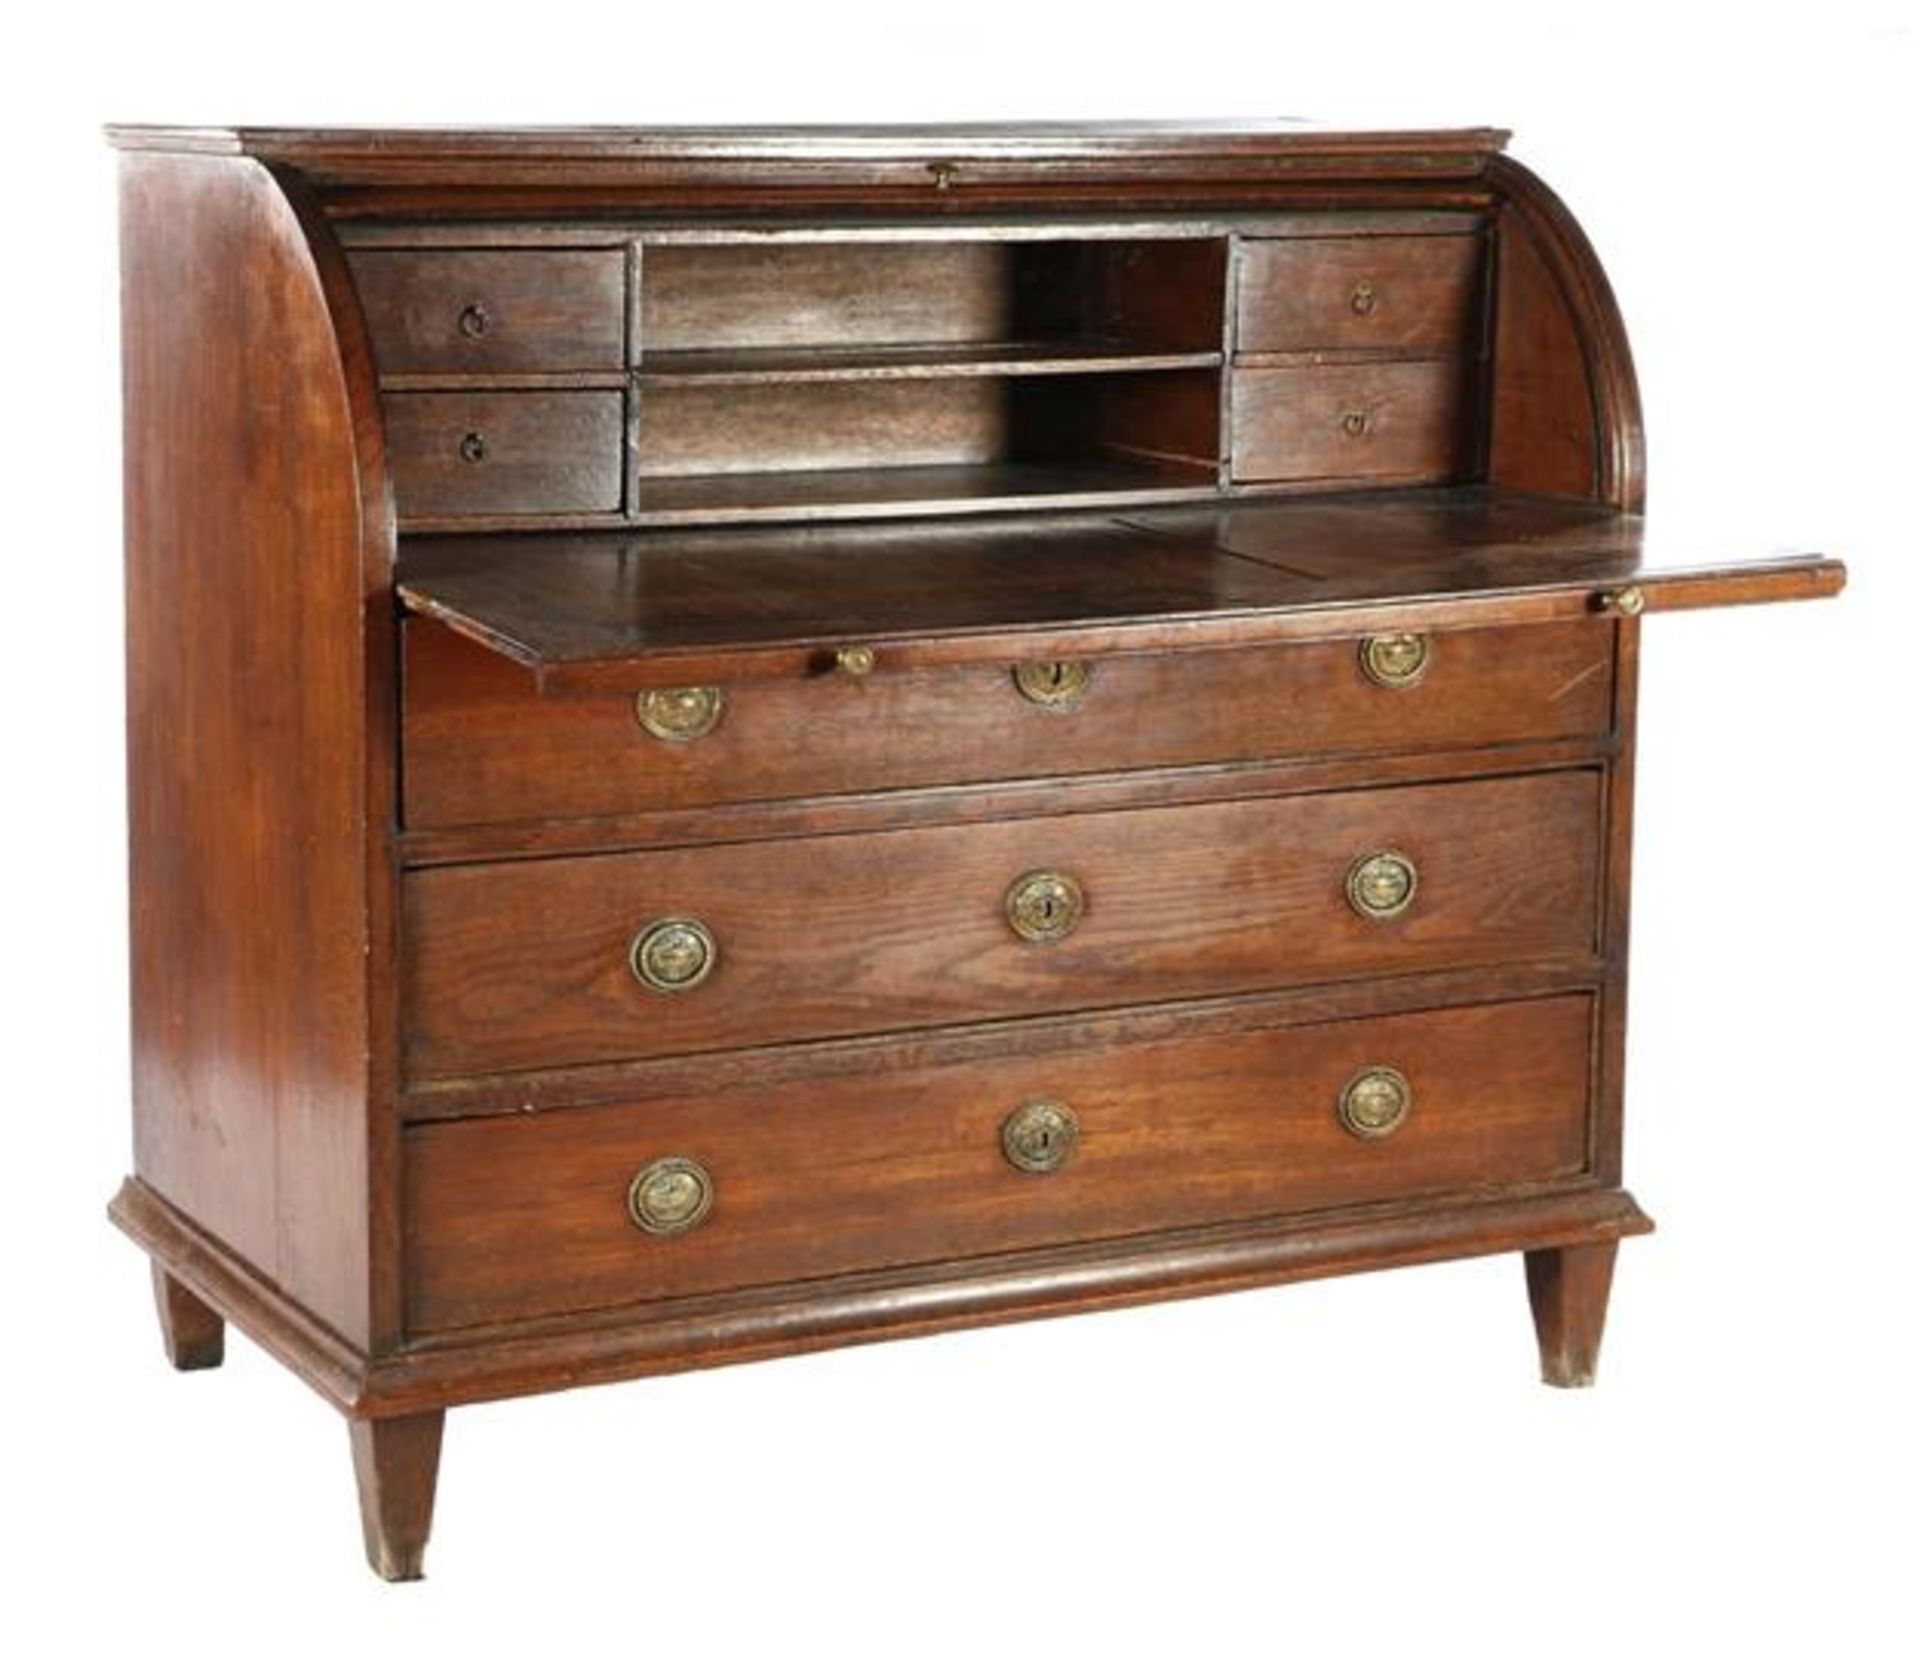 Oak Louis Seize cylinder desk with 3 drawers 110 cm high, 119 cm wide, 63.5 cm deep (1 ring of